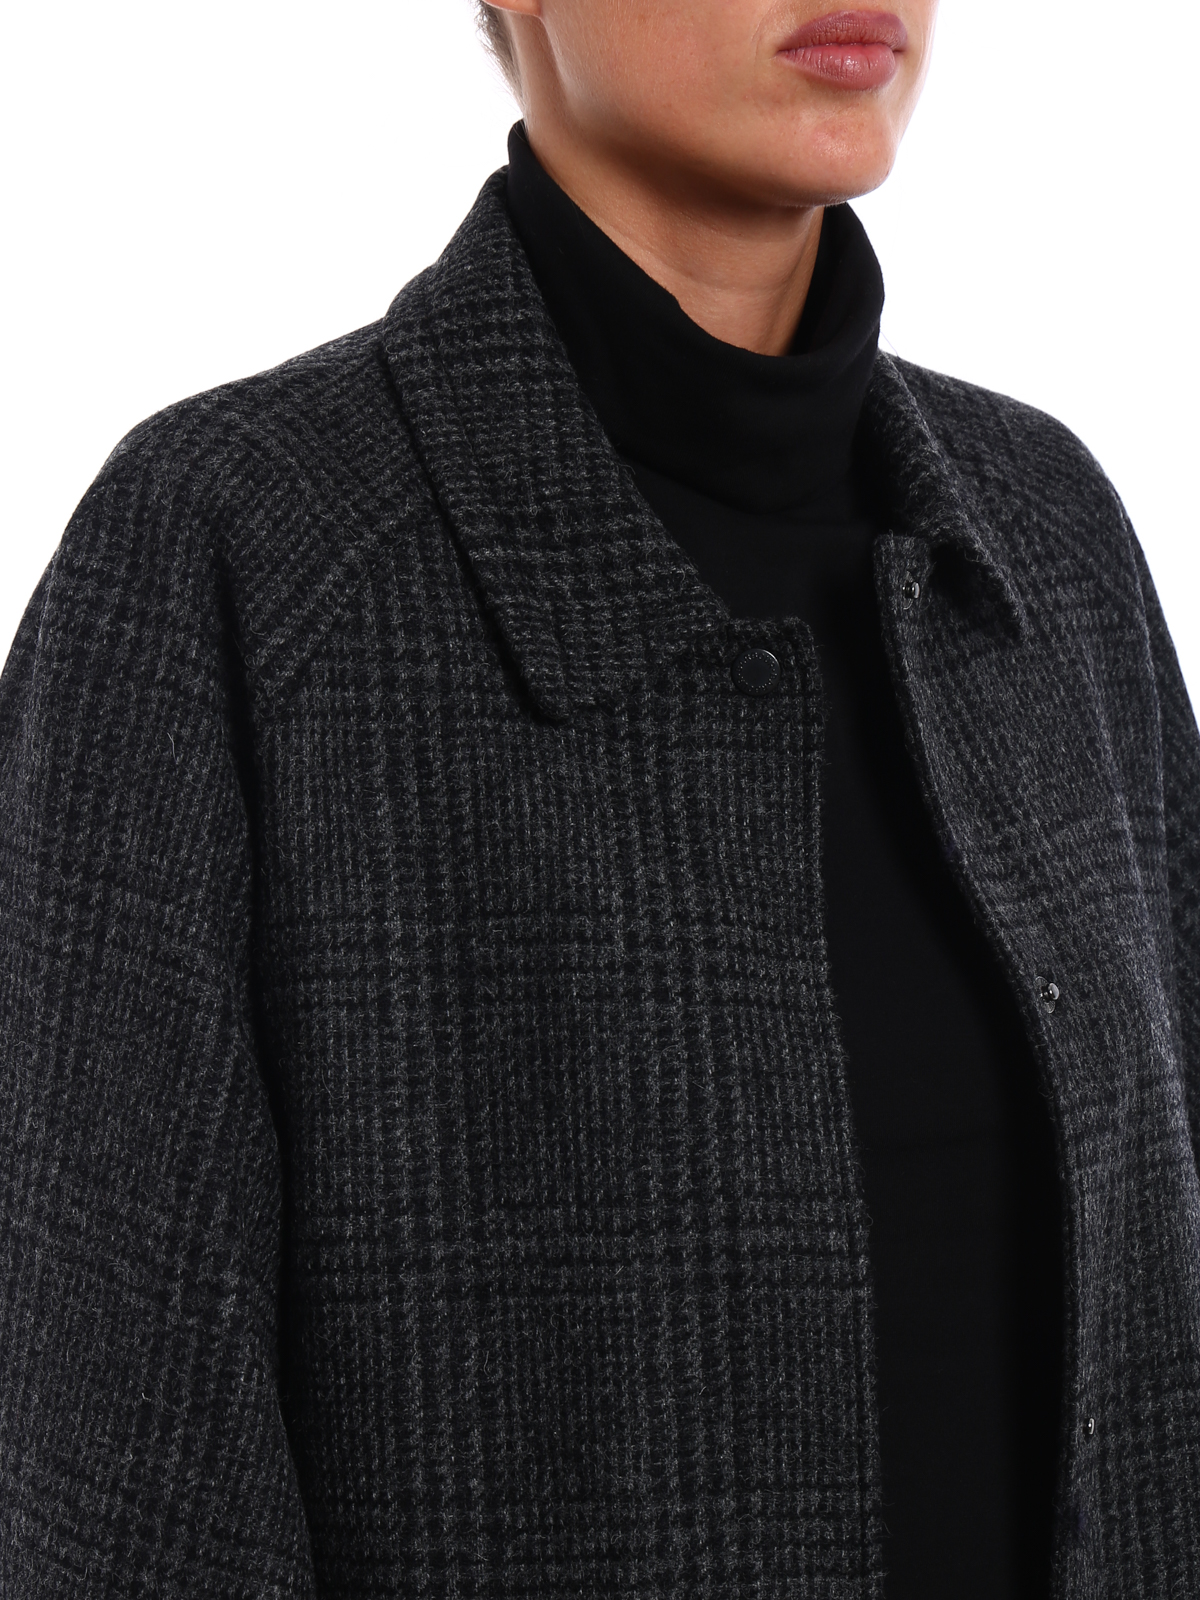 Barbour - Moulton Jacket wool coat 